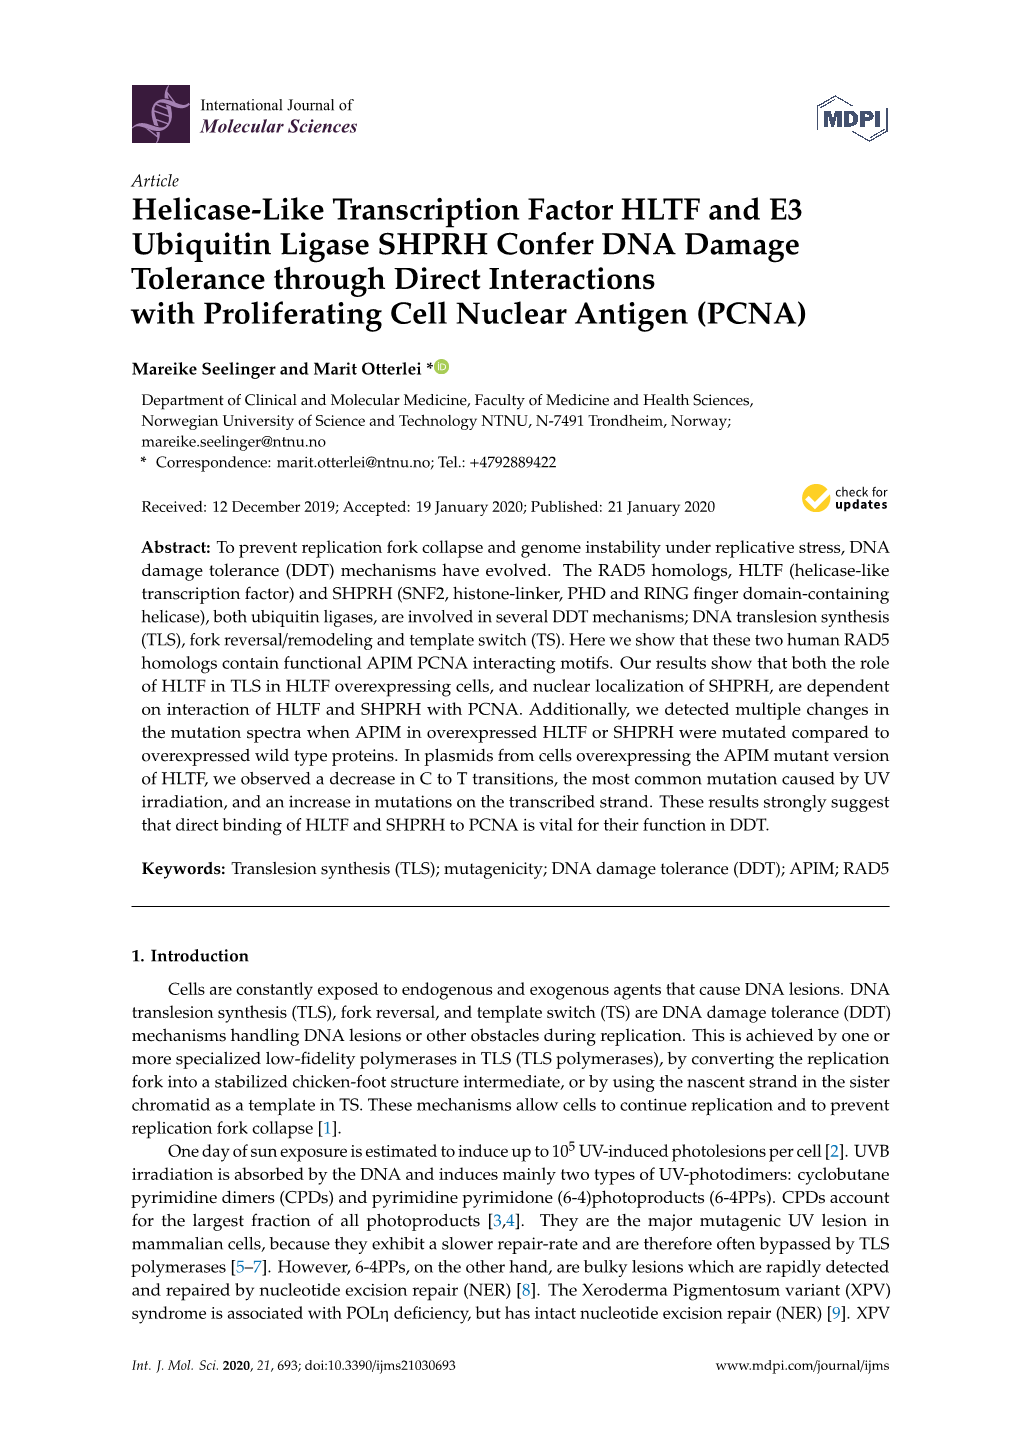 Helicase-Like Transcription Factor HLTF and E3 Ubiquitin Ligase